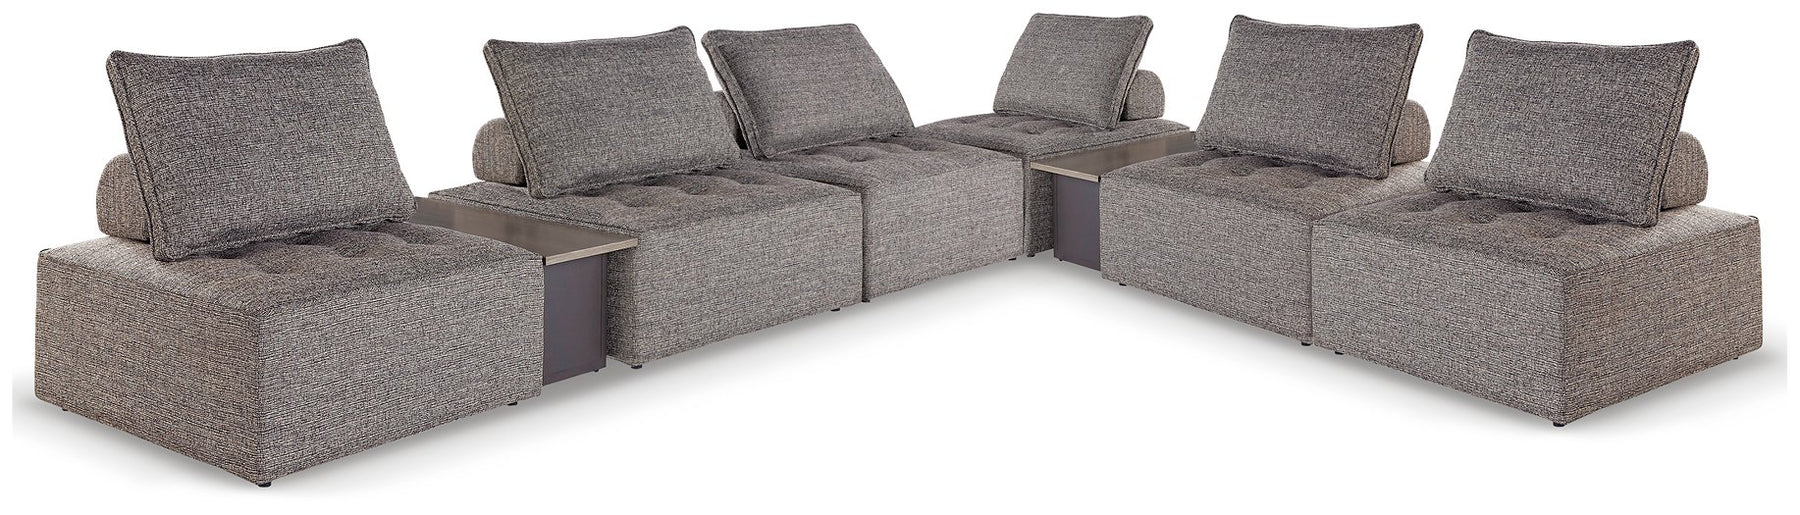 Bree Zee Outdoor Modular Seating - Half Price Furniture